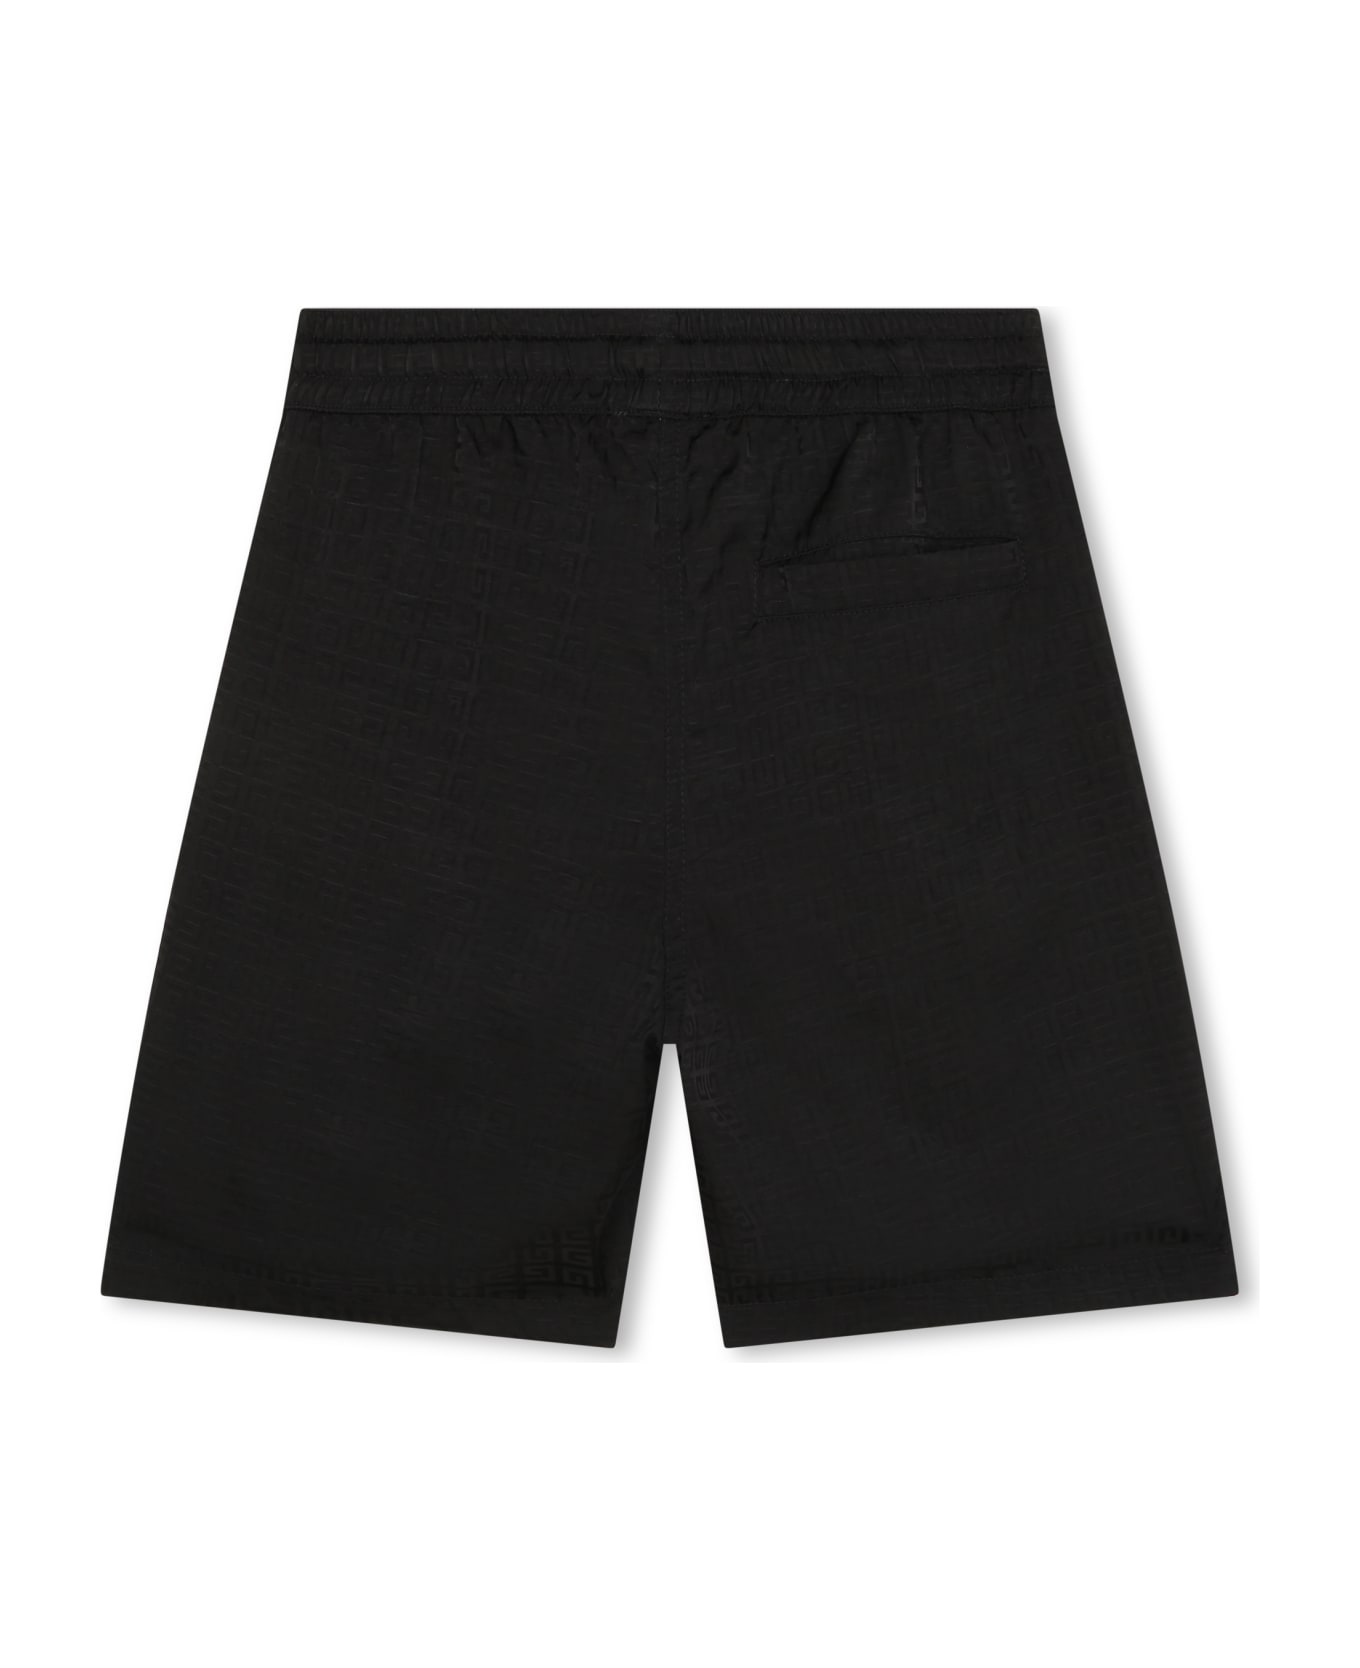 Givenchy Sports Shorts With Monogram - Nero ボトムス